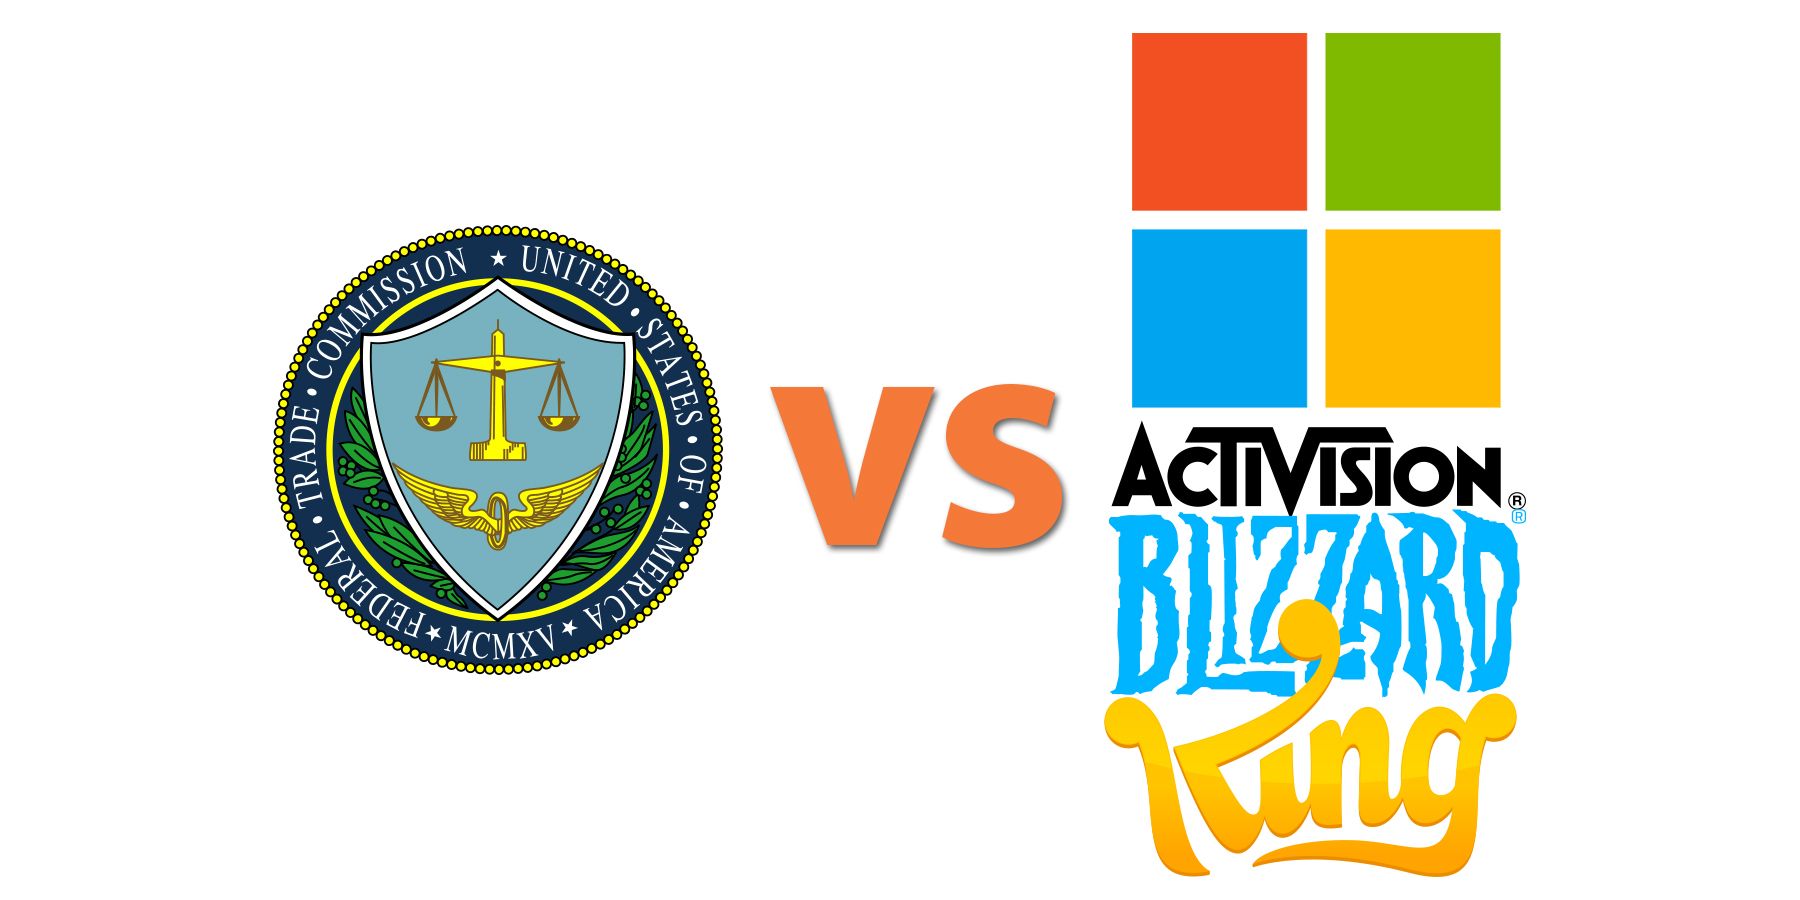 FTC vs Microsoft Activision Blizzard King logos on white background